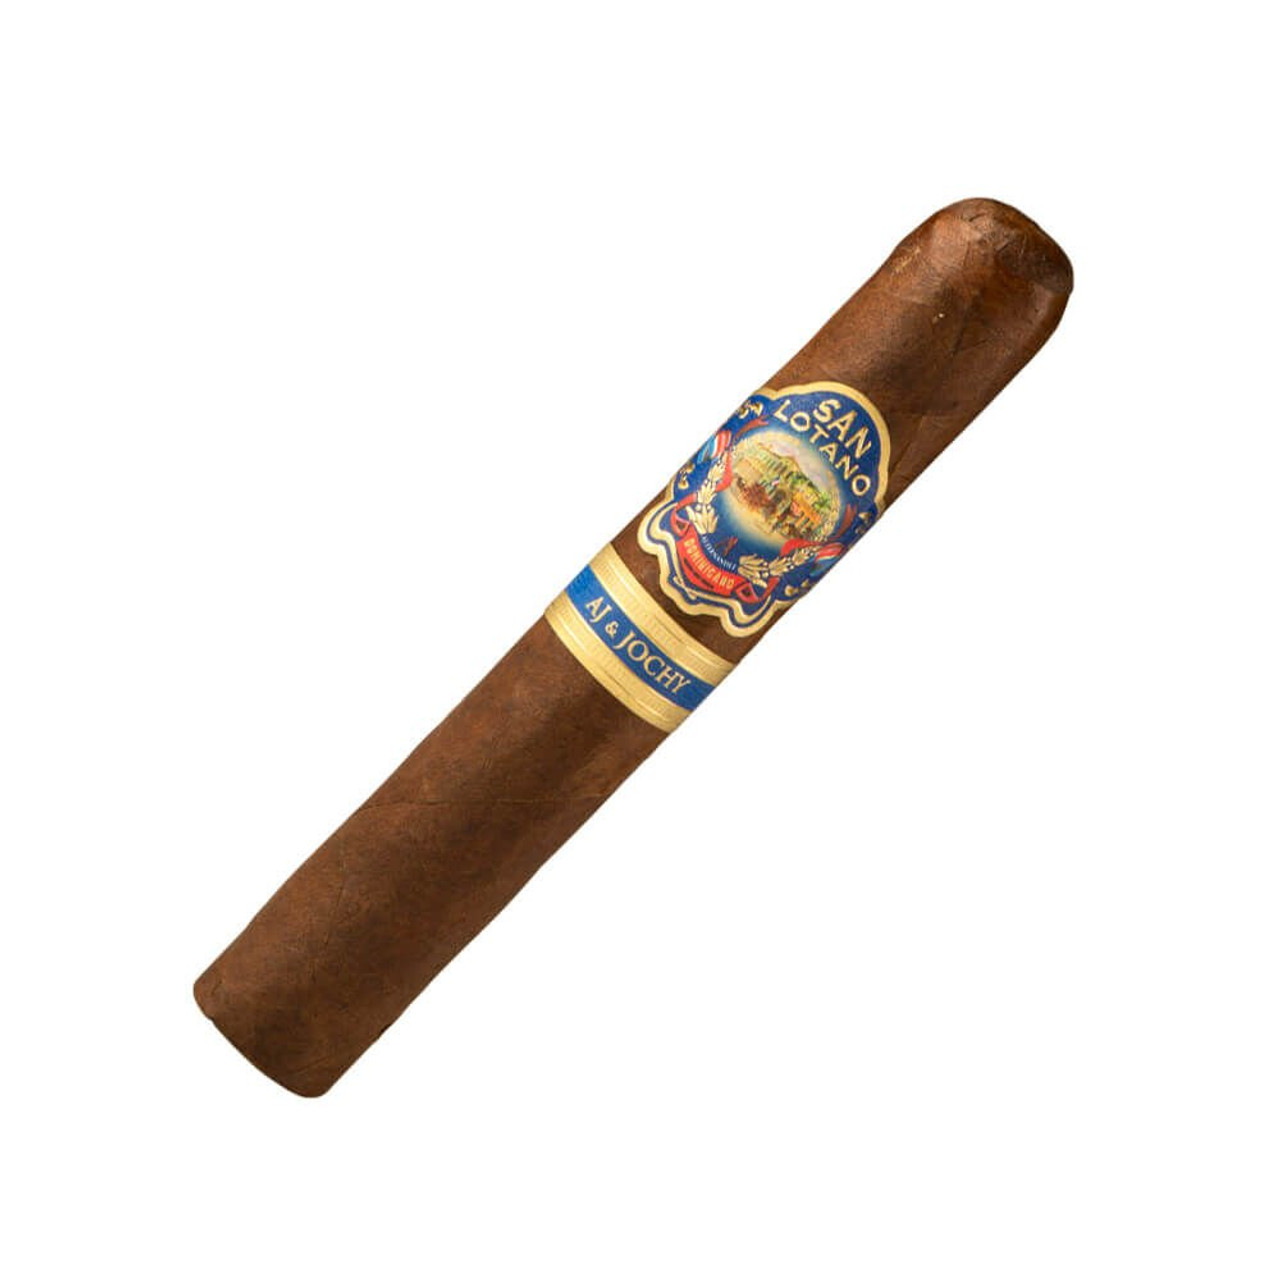 AJ Fernandez San Lotano Dominicano Robusto Cigars - 5 x 50 Single